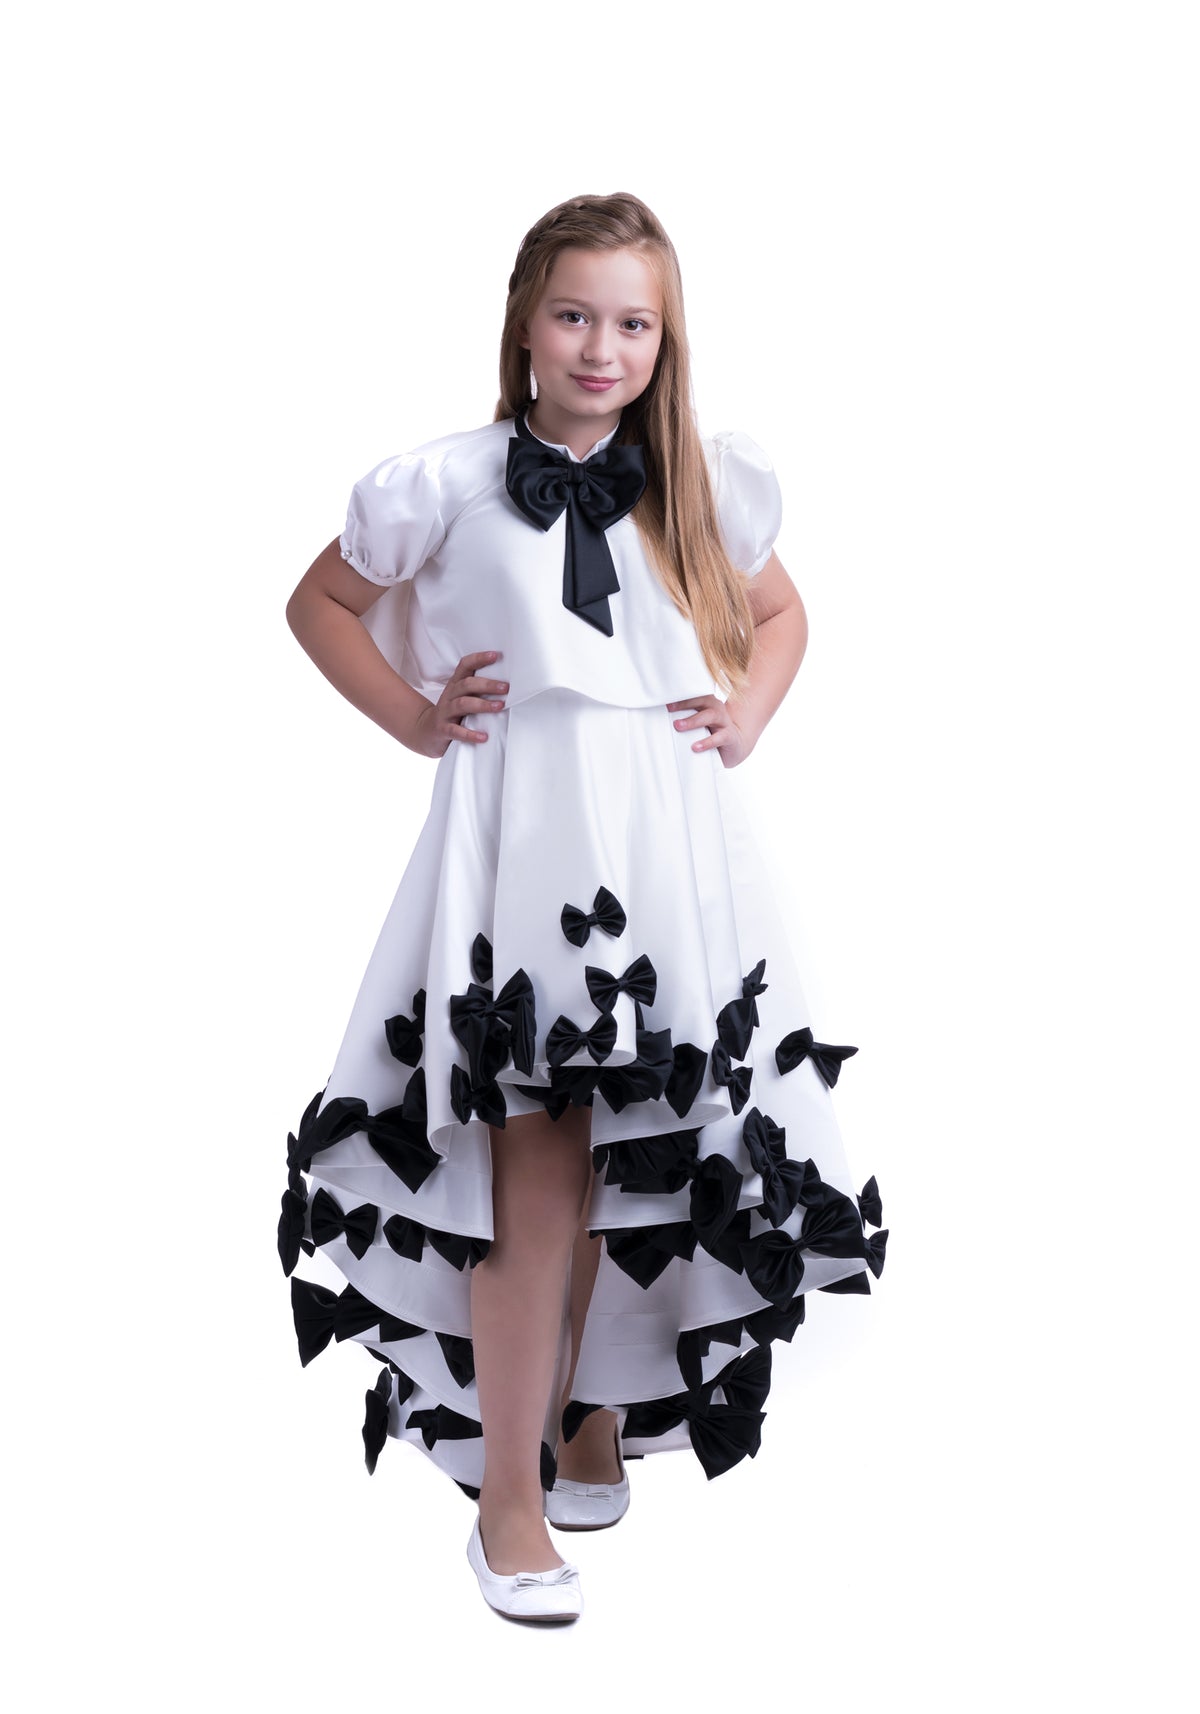 Elegant white dress with black bows